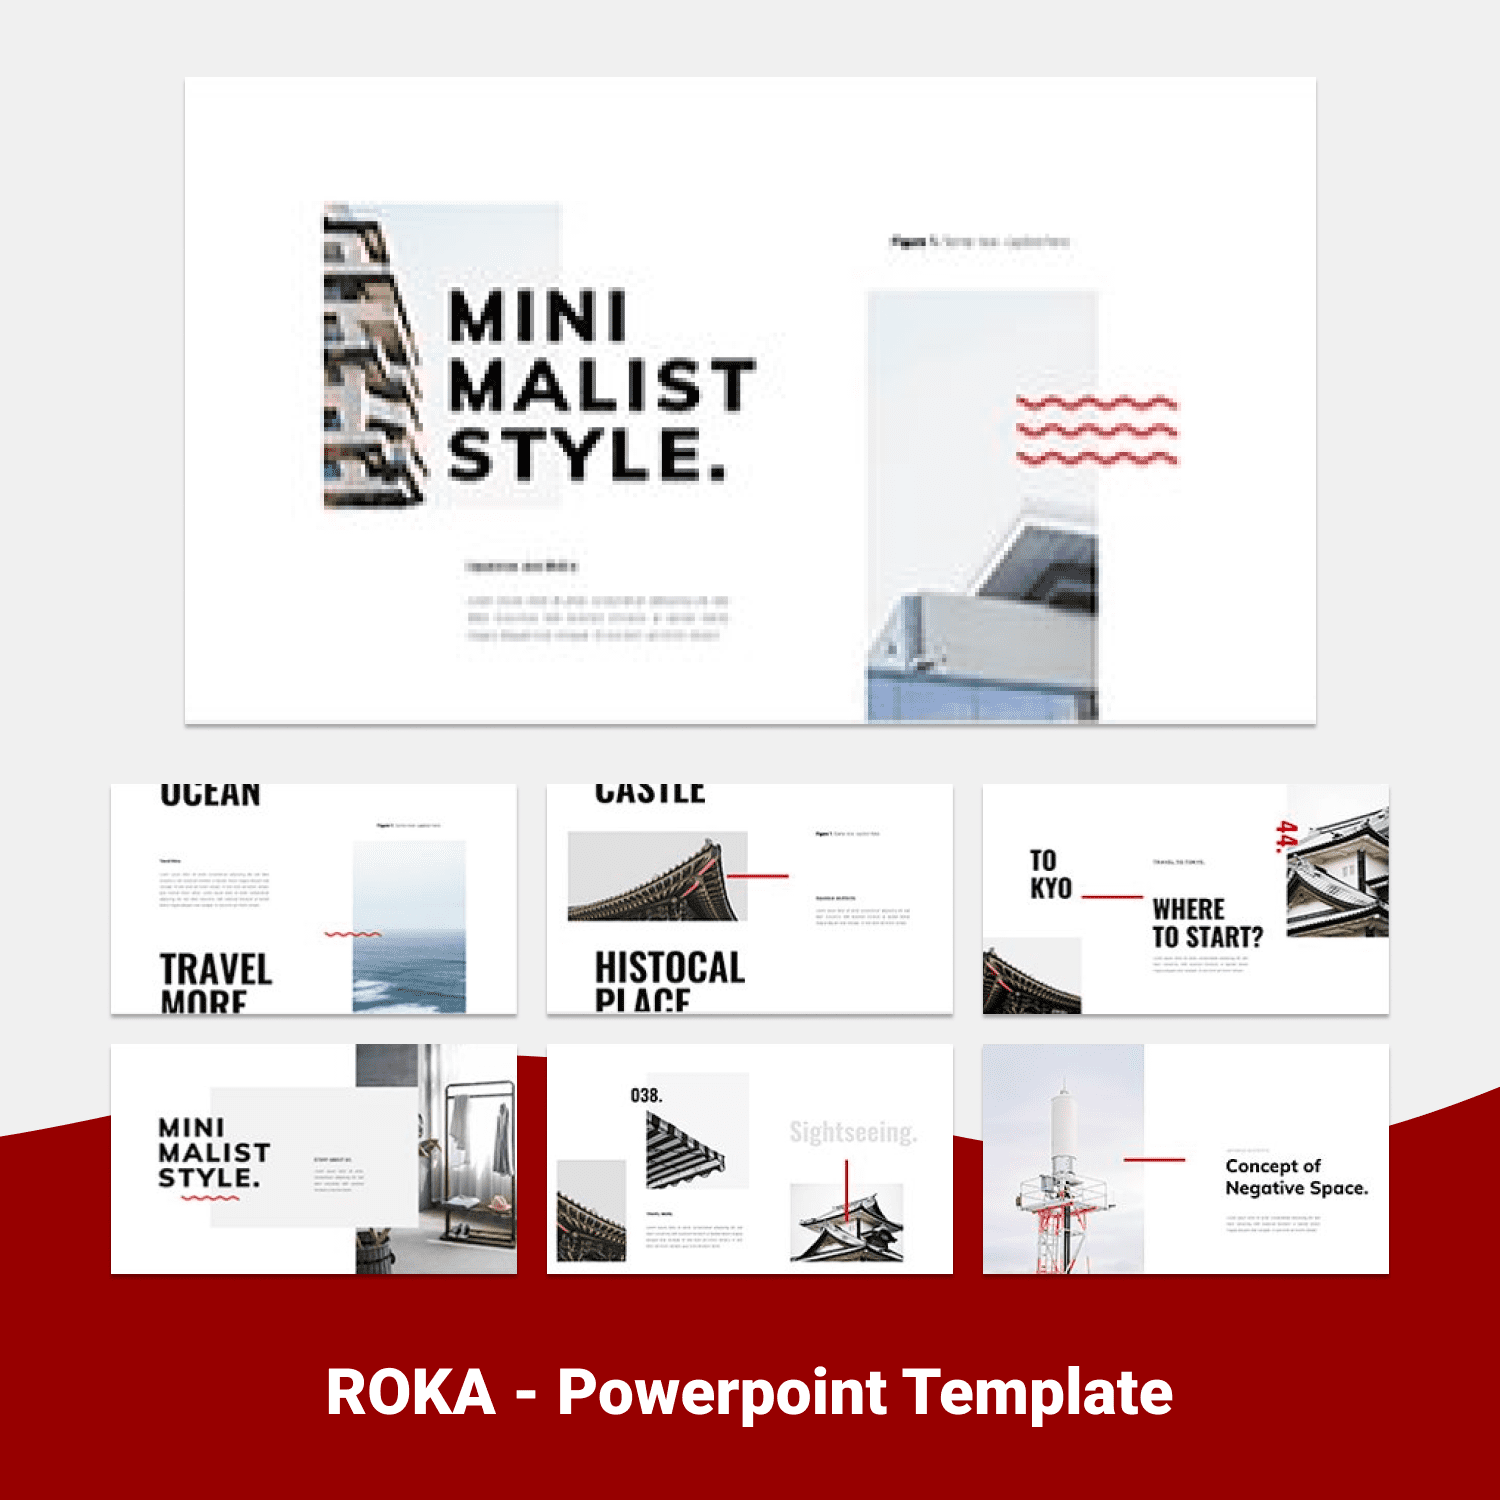 ROKA - Powerpoint Template.